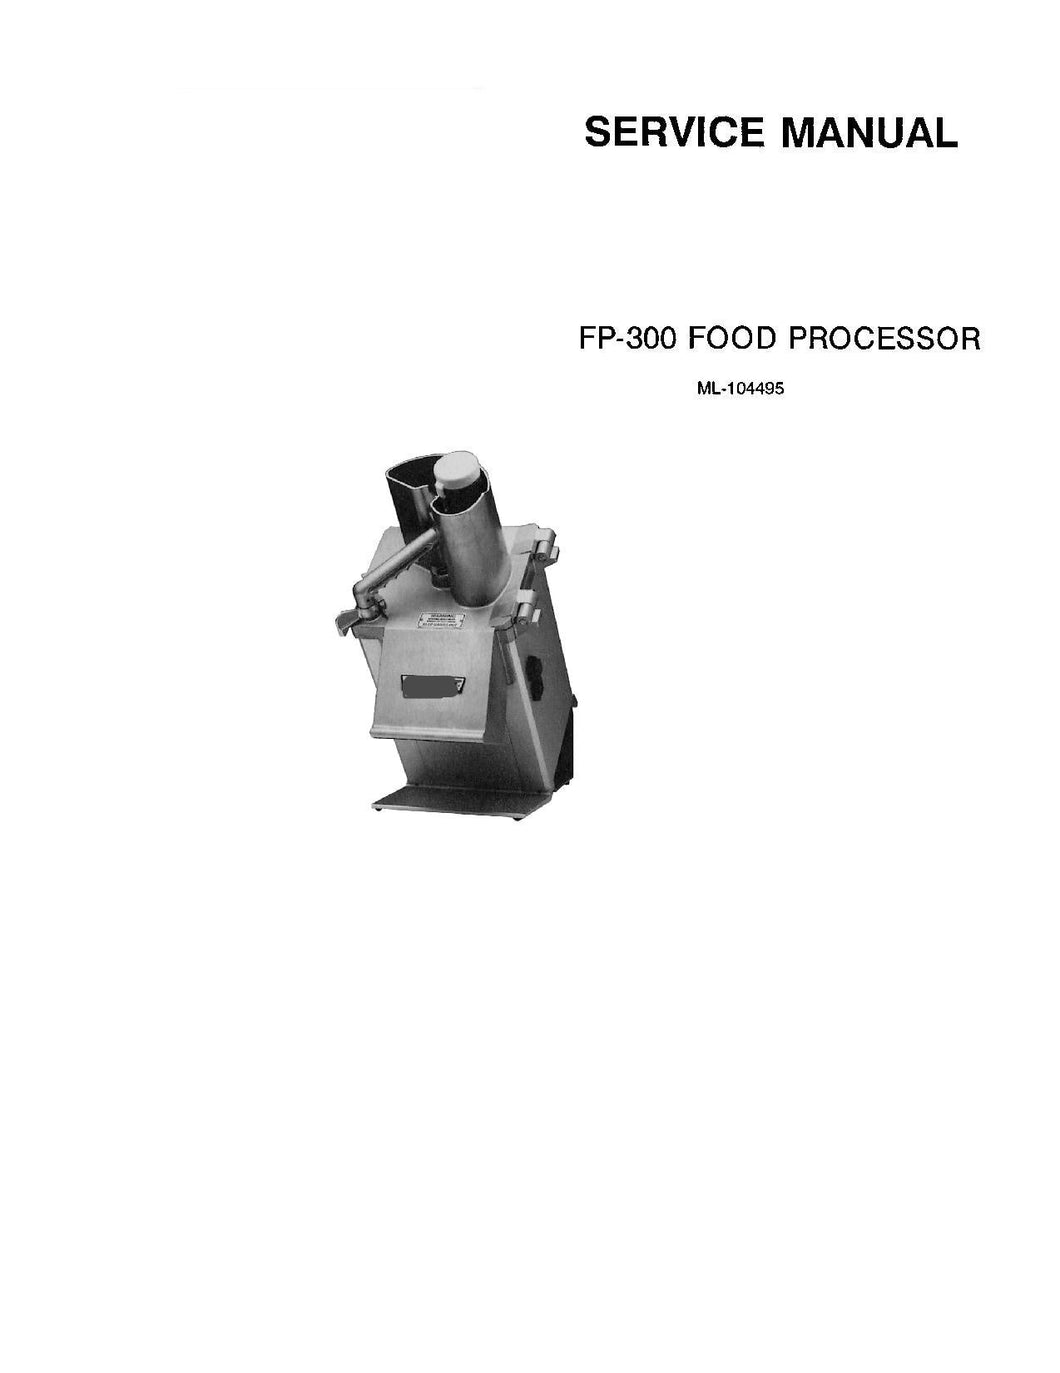 HOBART MODEL FP-300 FOOD PROCESSOR SERVICE, TECHNICAL AND REPAIR MANUALS PDF